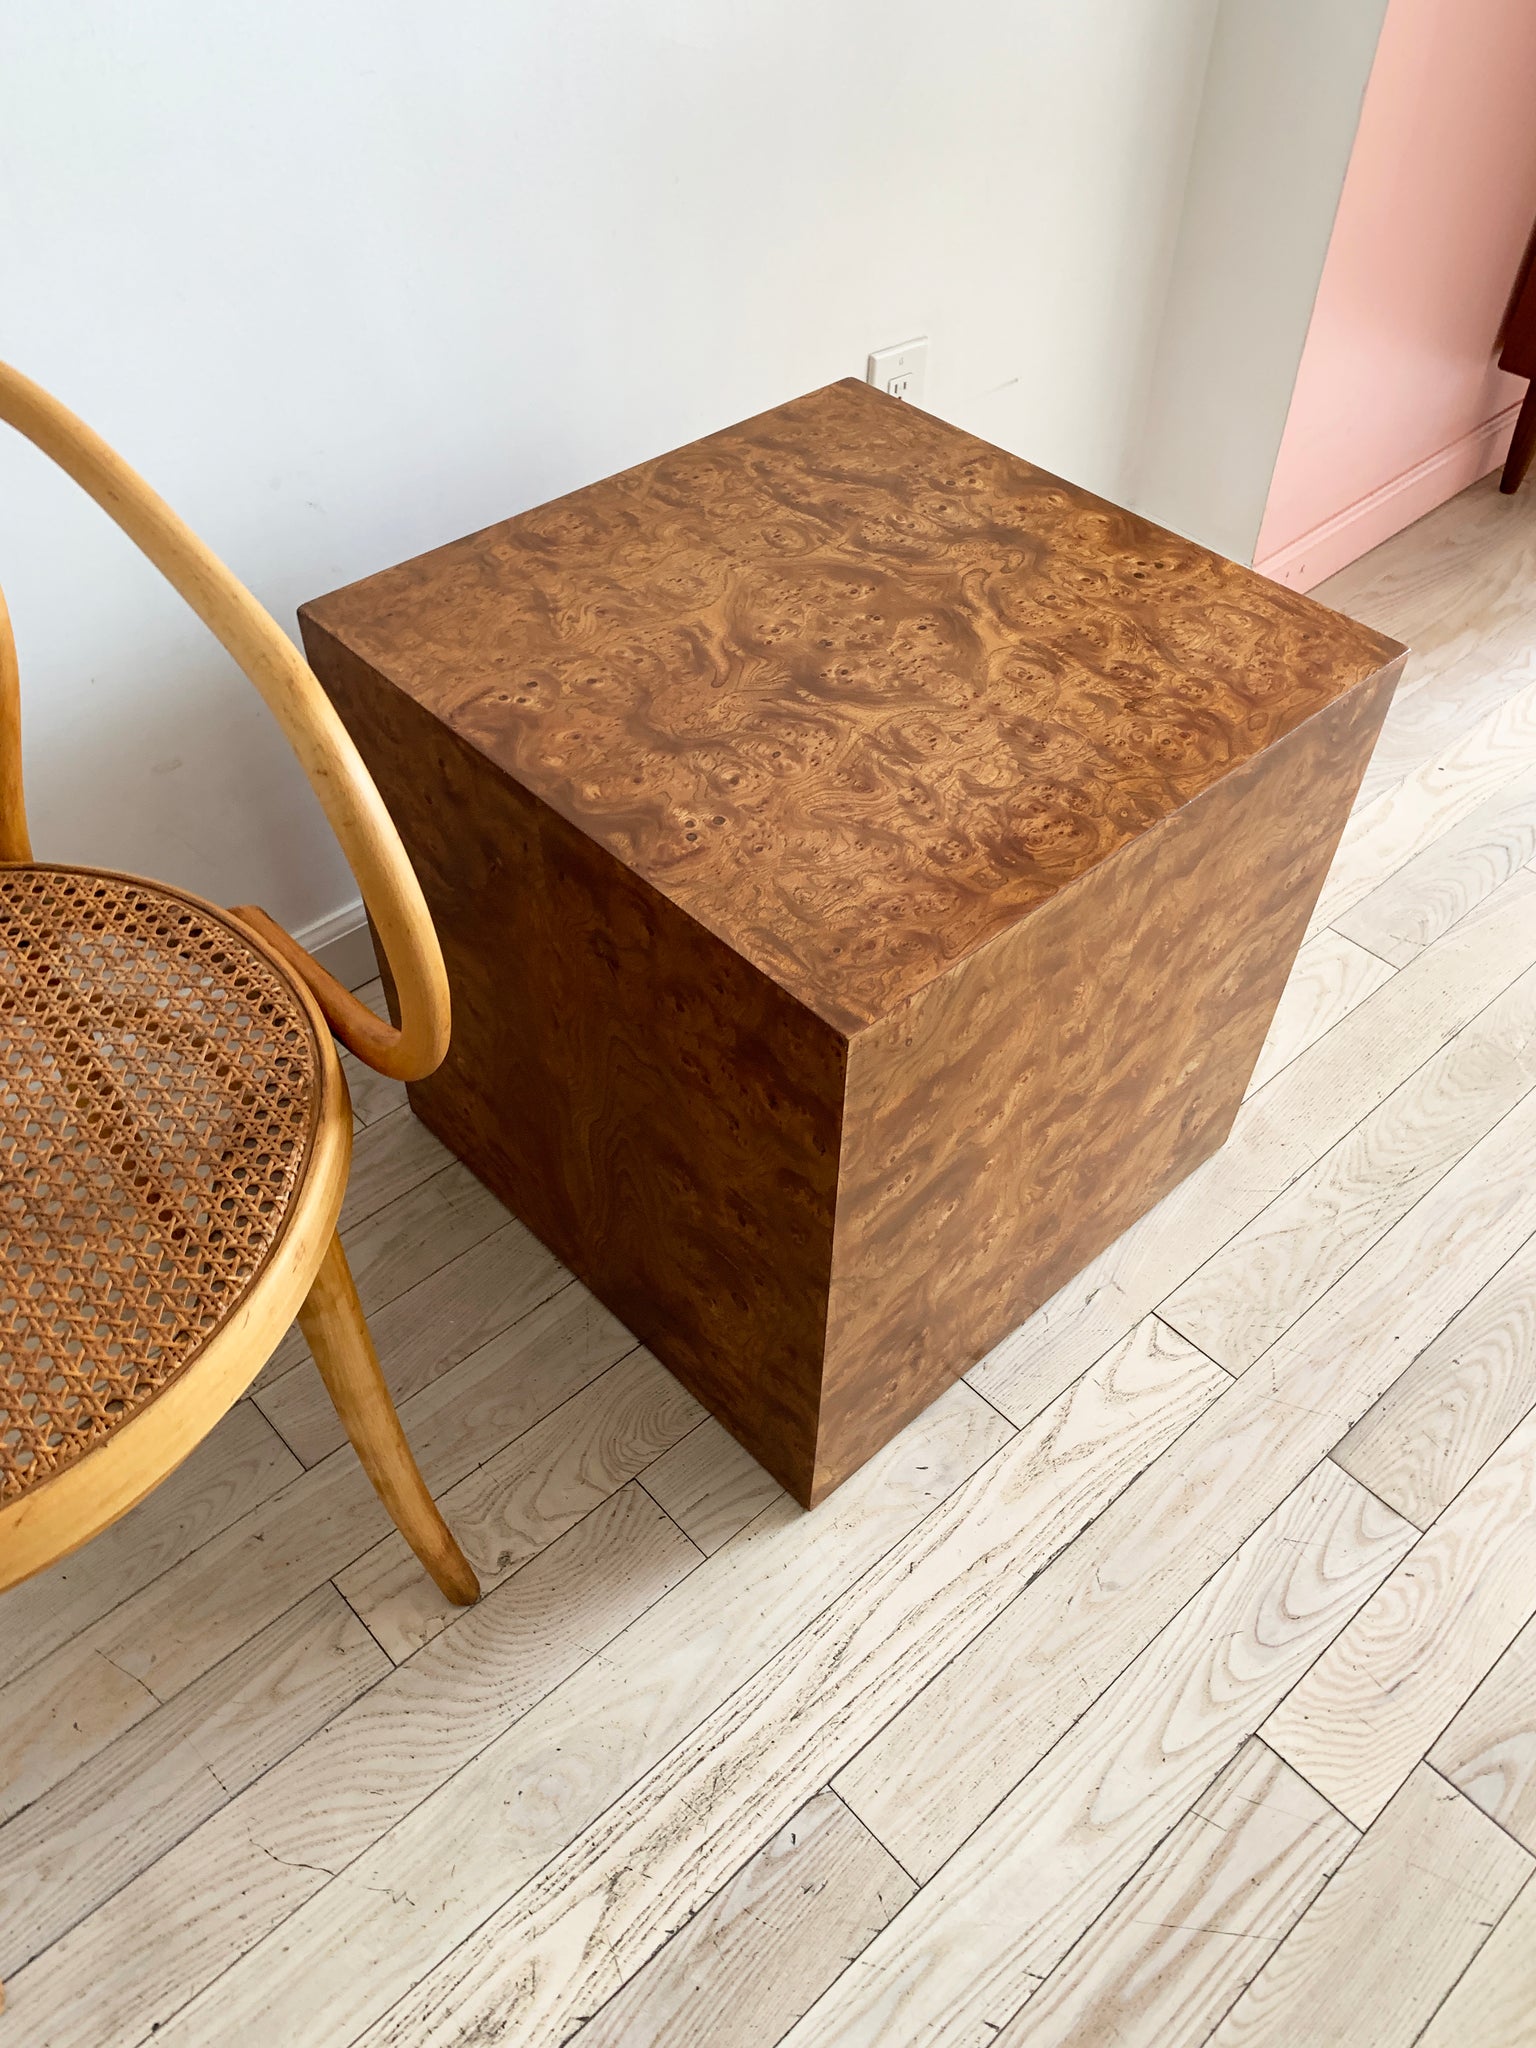 1970s Elm Burl Wood Cube Side Table